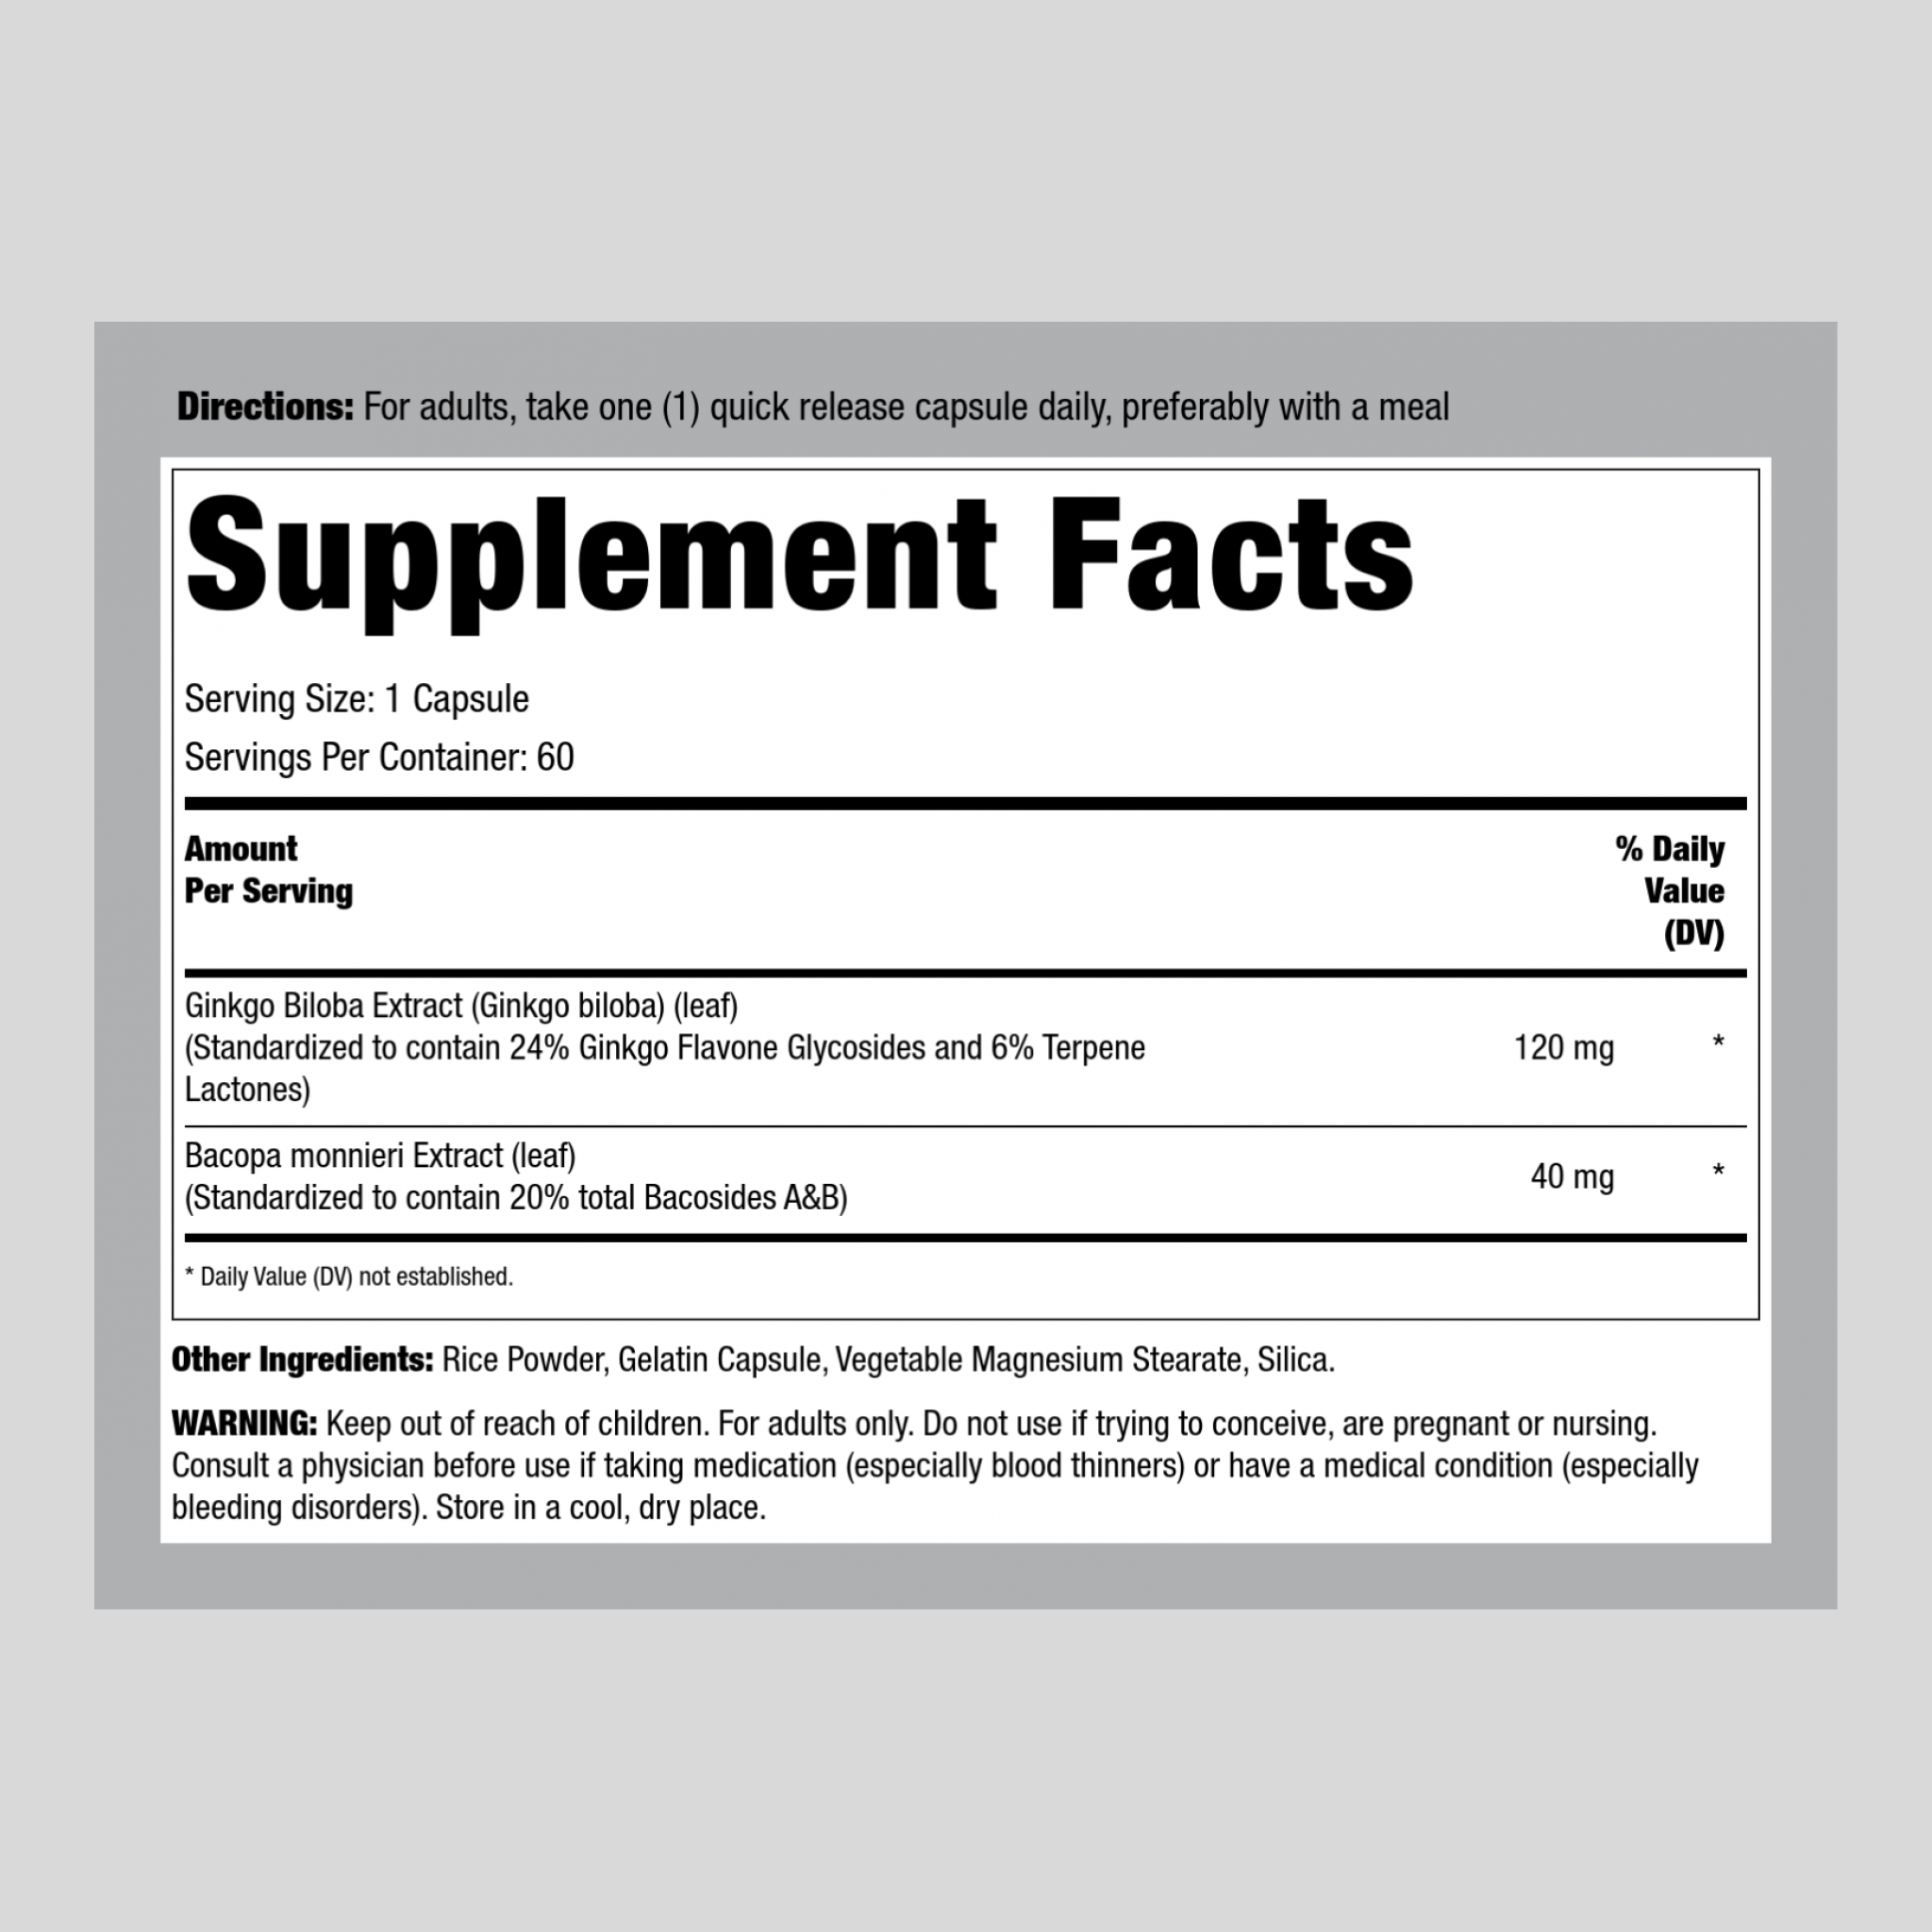 Ginkgo Biloba Standardized Extract, 120 mg, 60 Capsules